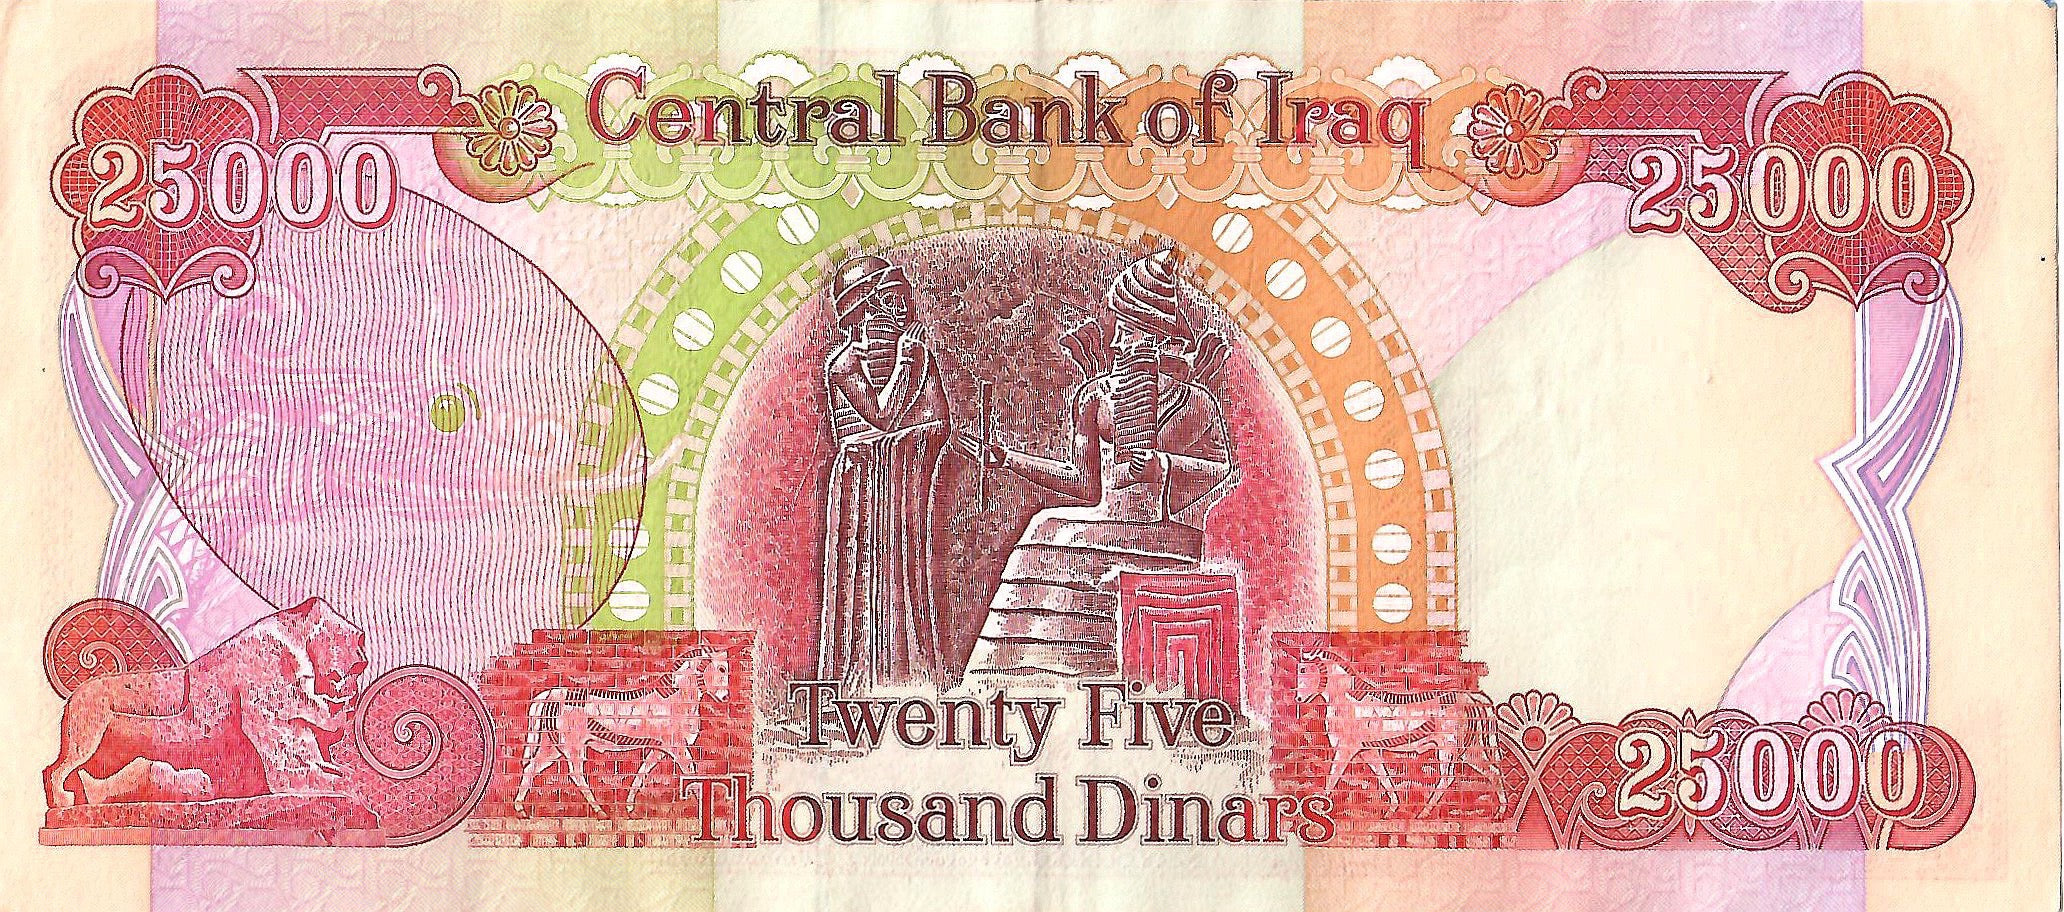 Iraq 25,000 Dinars Banknote, 2006, P-96c, UNC